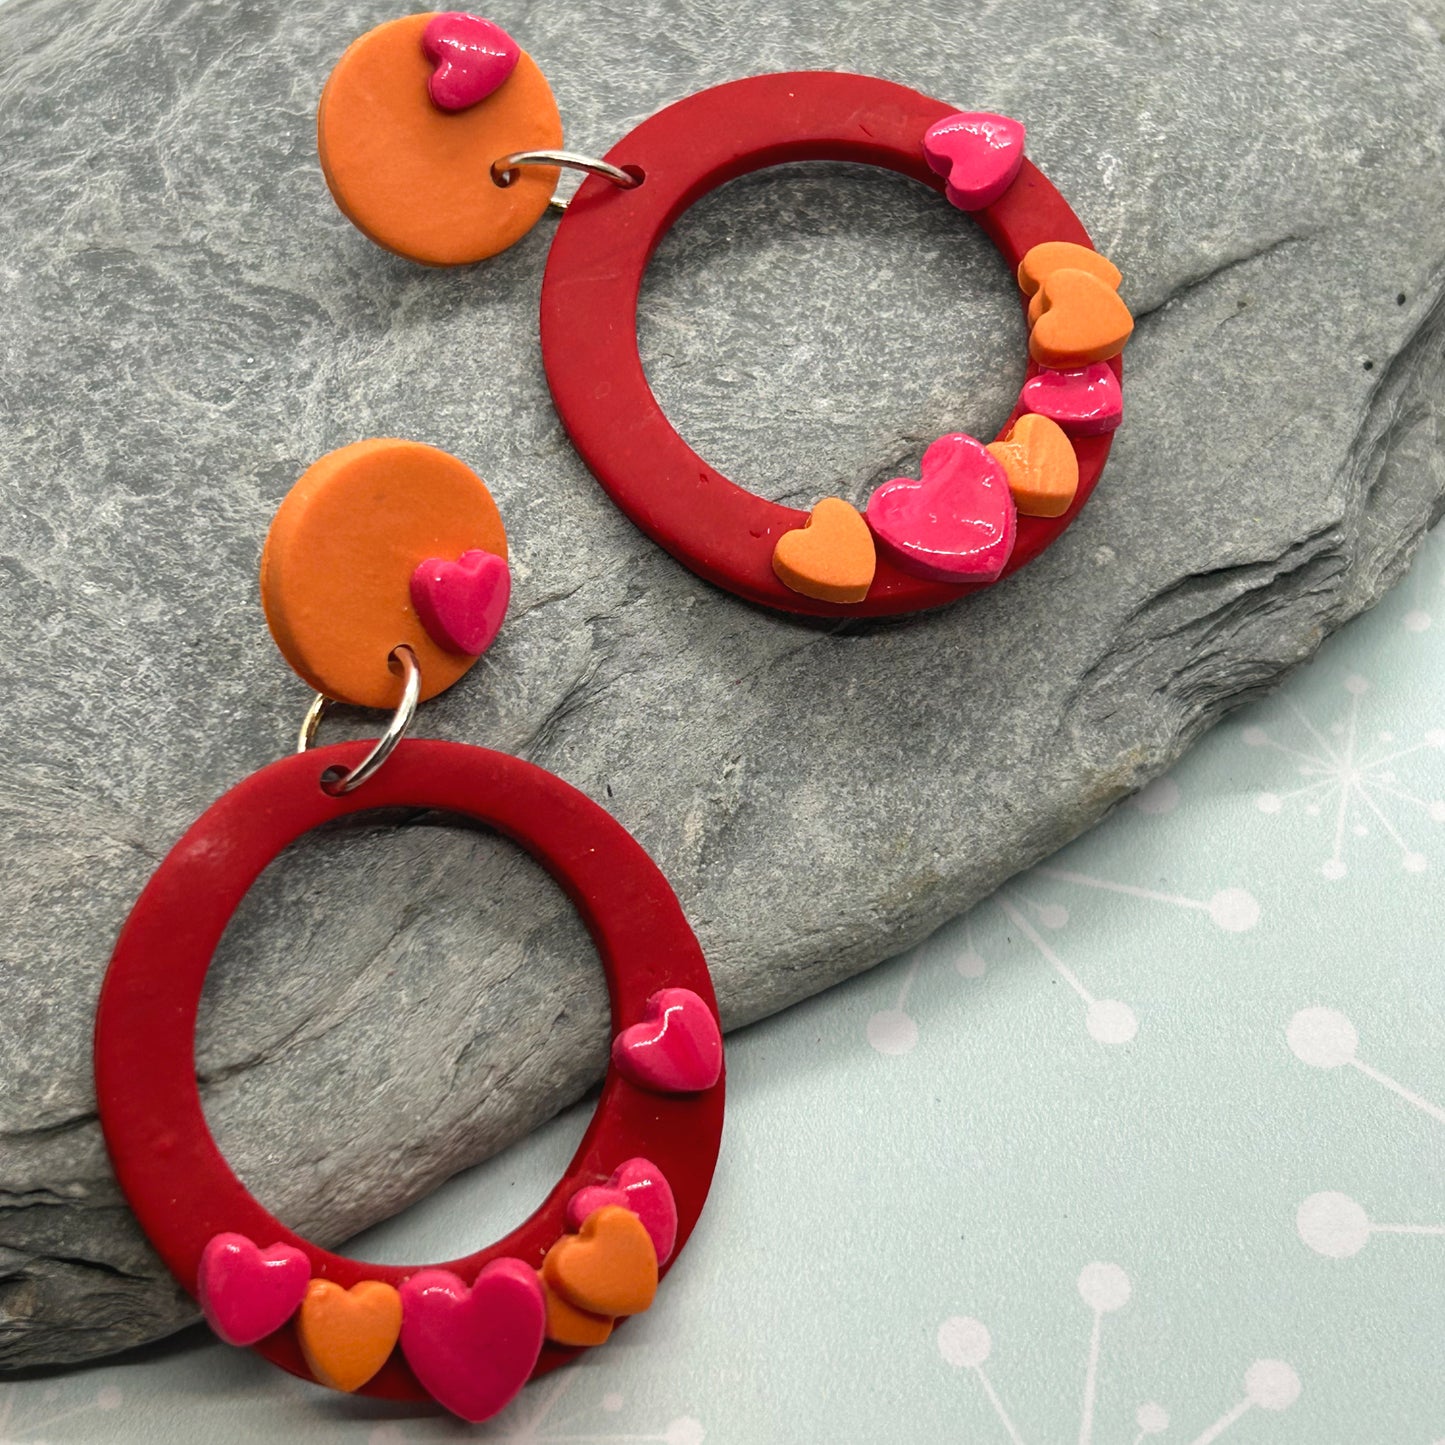 Love heart hoops earrings - The Argentum Design Co